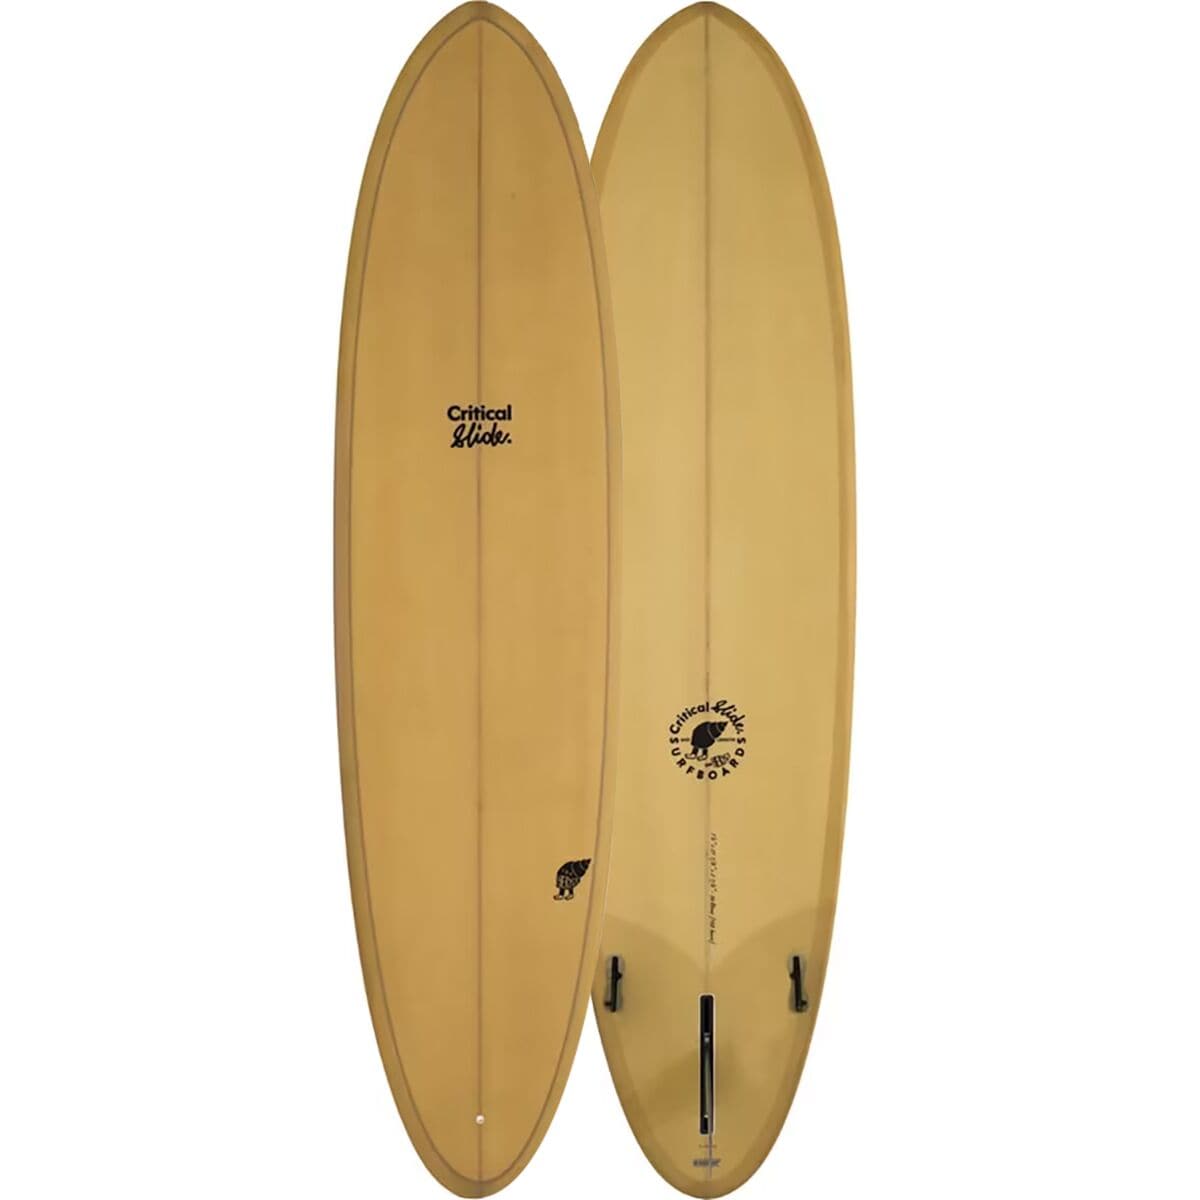 The Critical Slide Society Hermit Longboard Surfboard